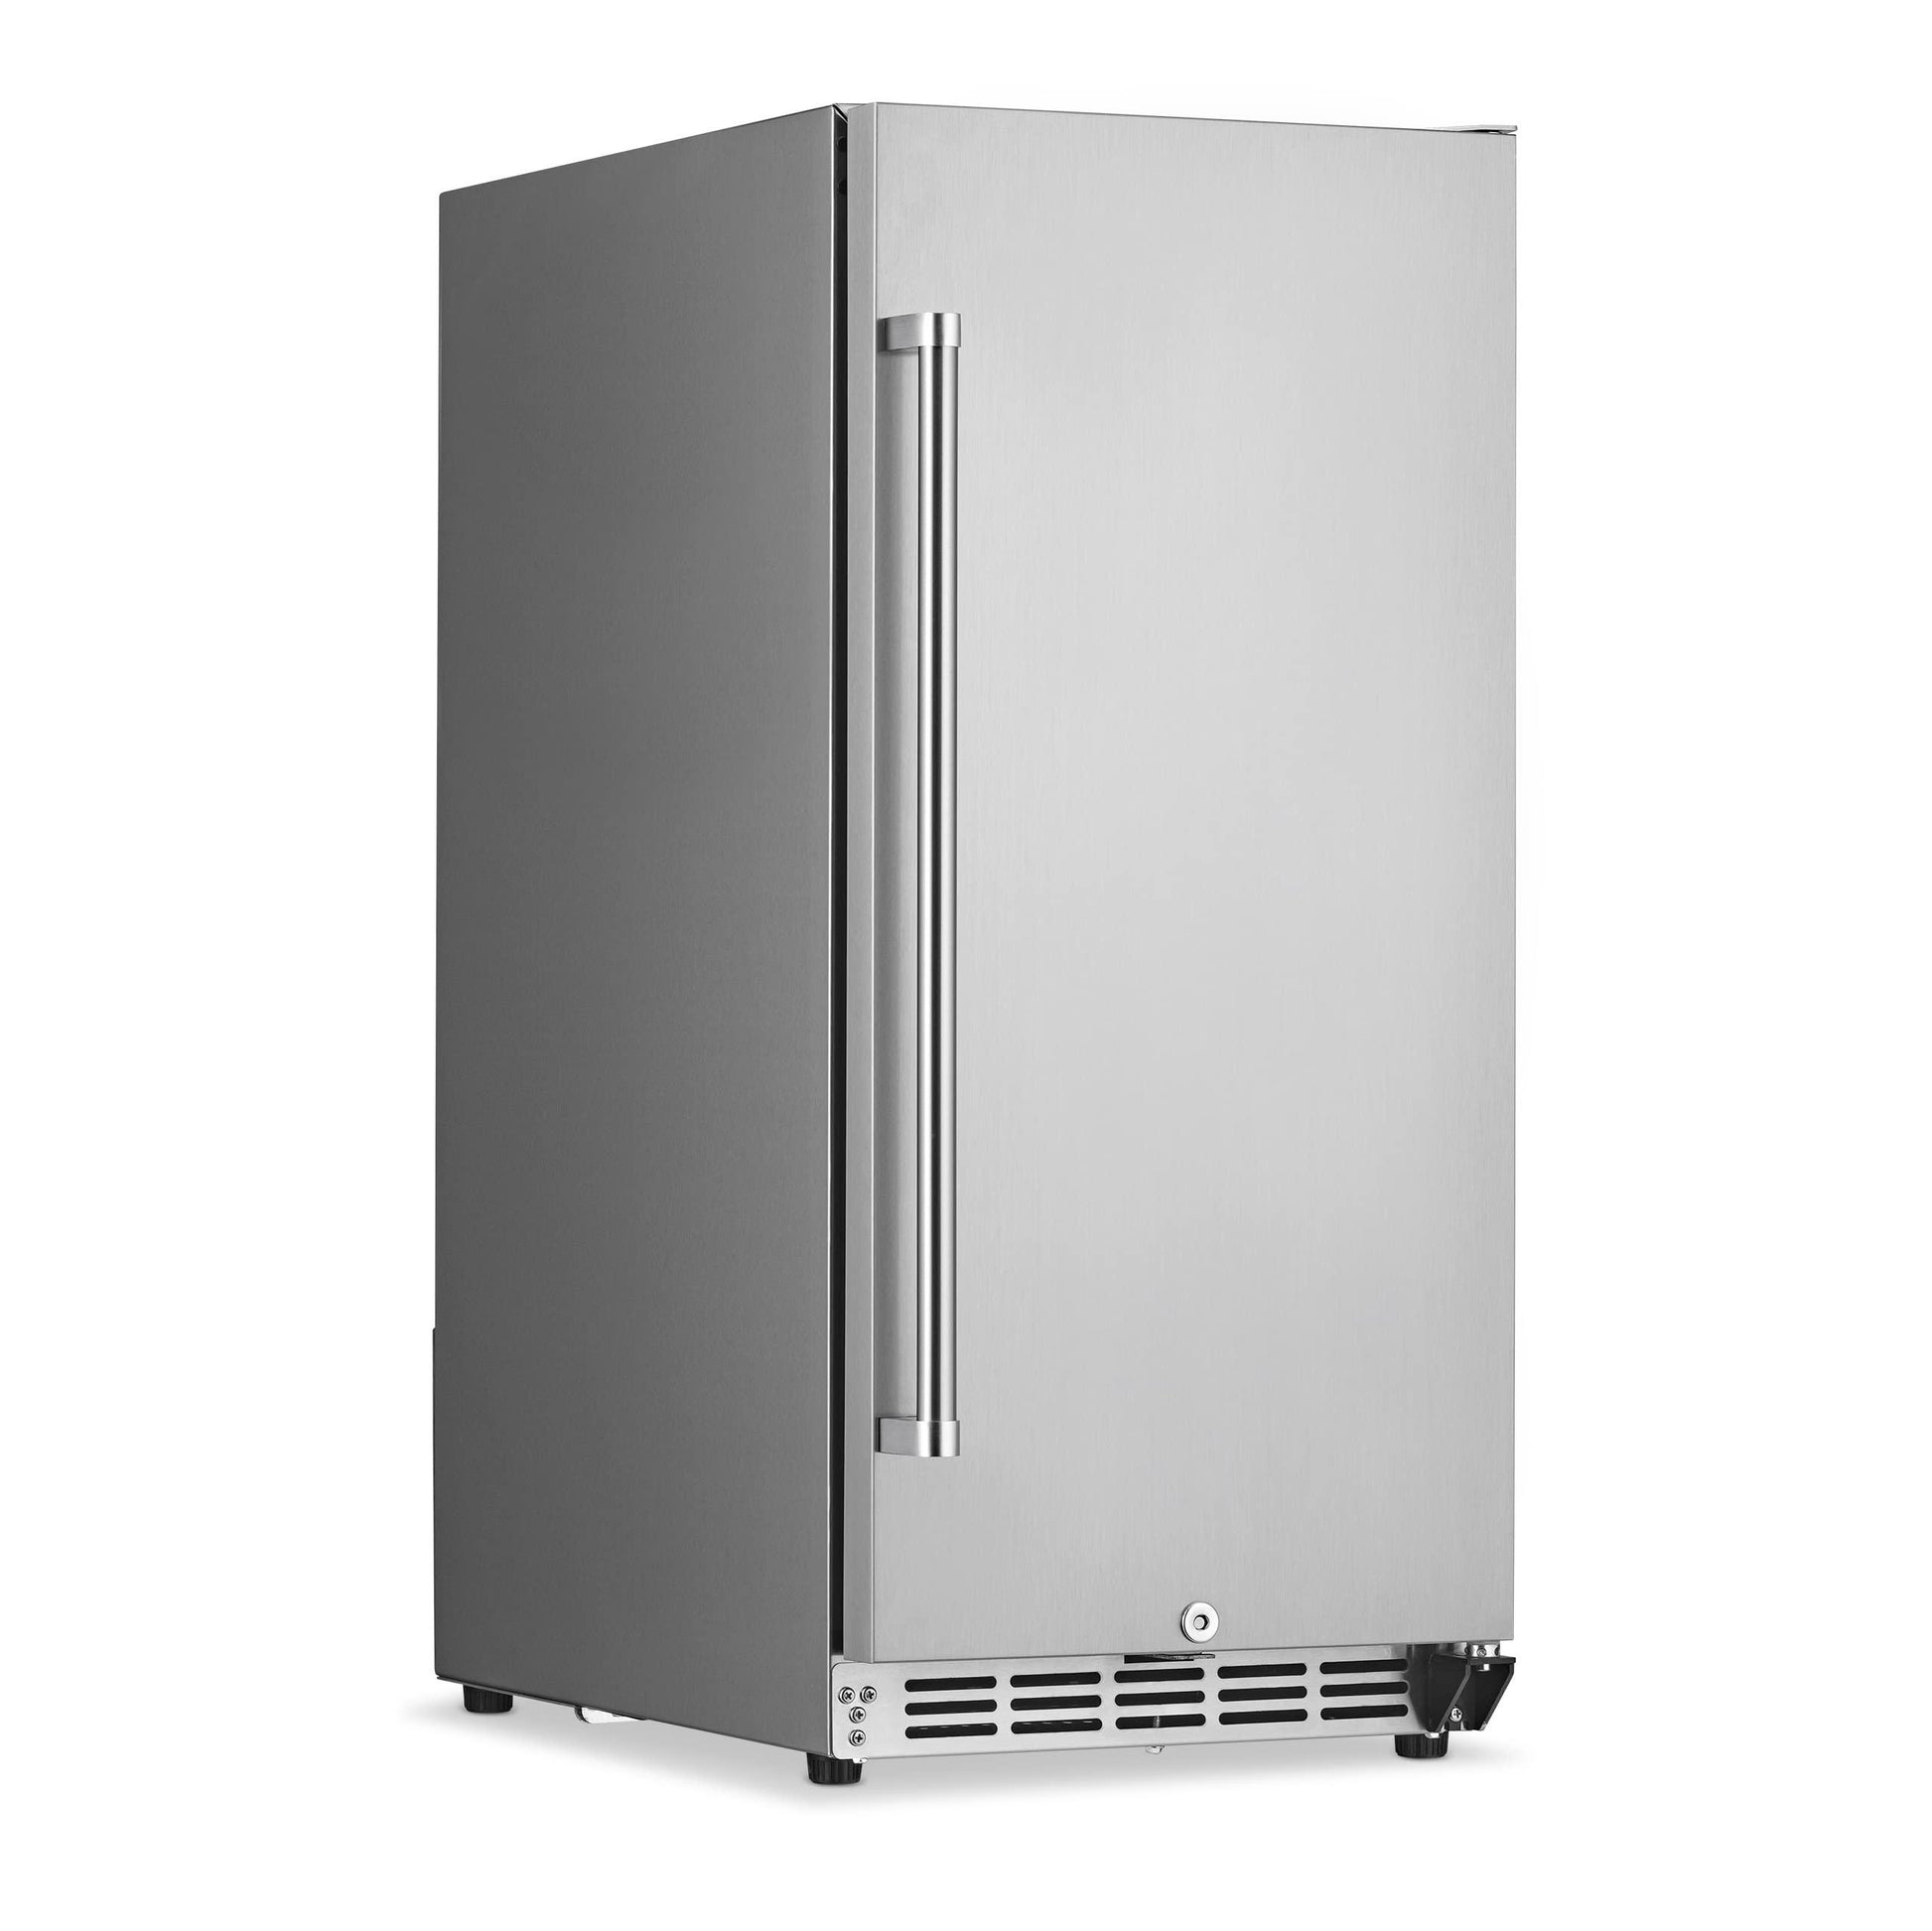 NewAir 15" Commerical Beverage Refrigerator | Weatherproof Stainless Steel Fridge | Built-In or Freestanding Outdoor Patio Fridge For Beer, Wine, Food NCR032SS00 - CookCave